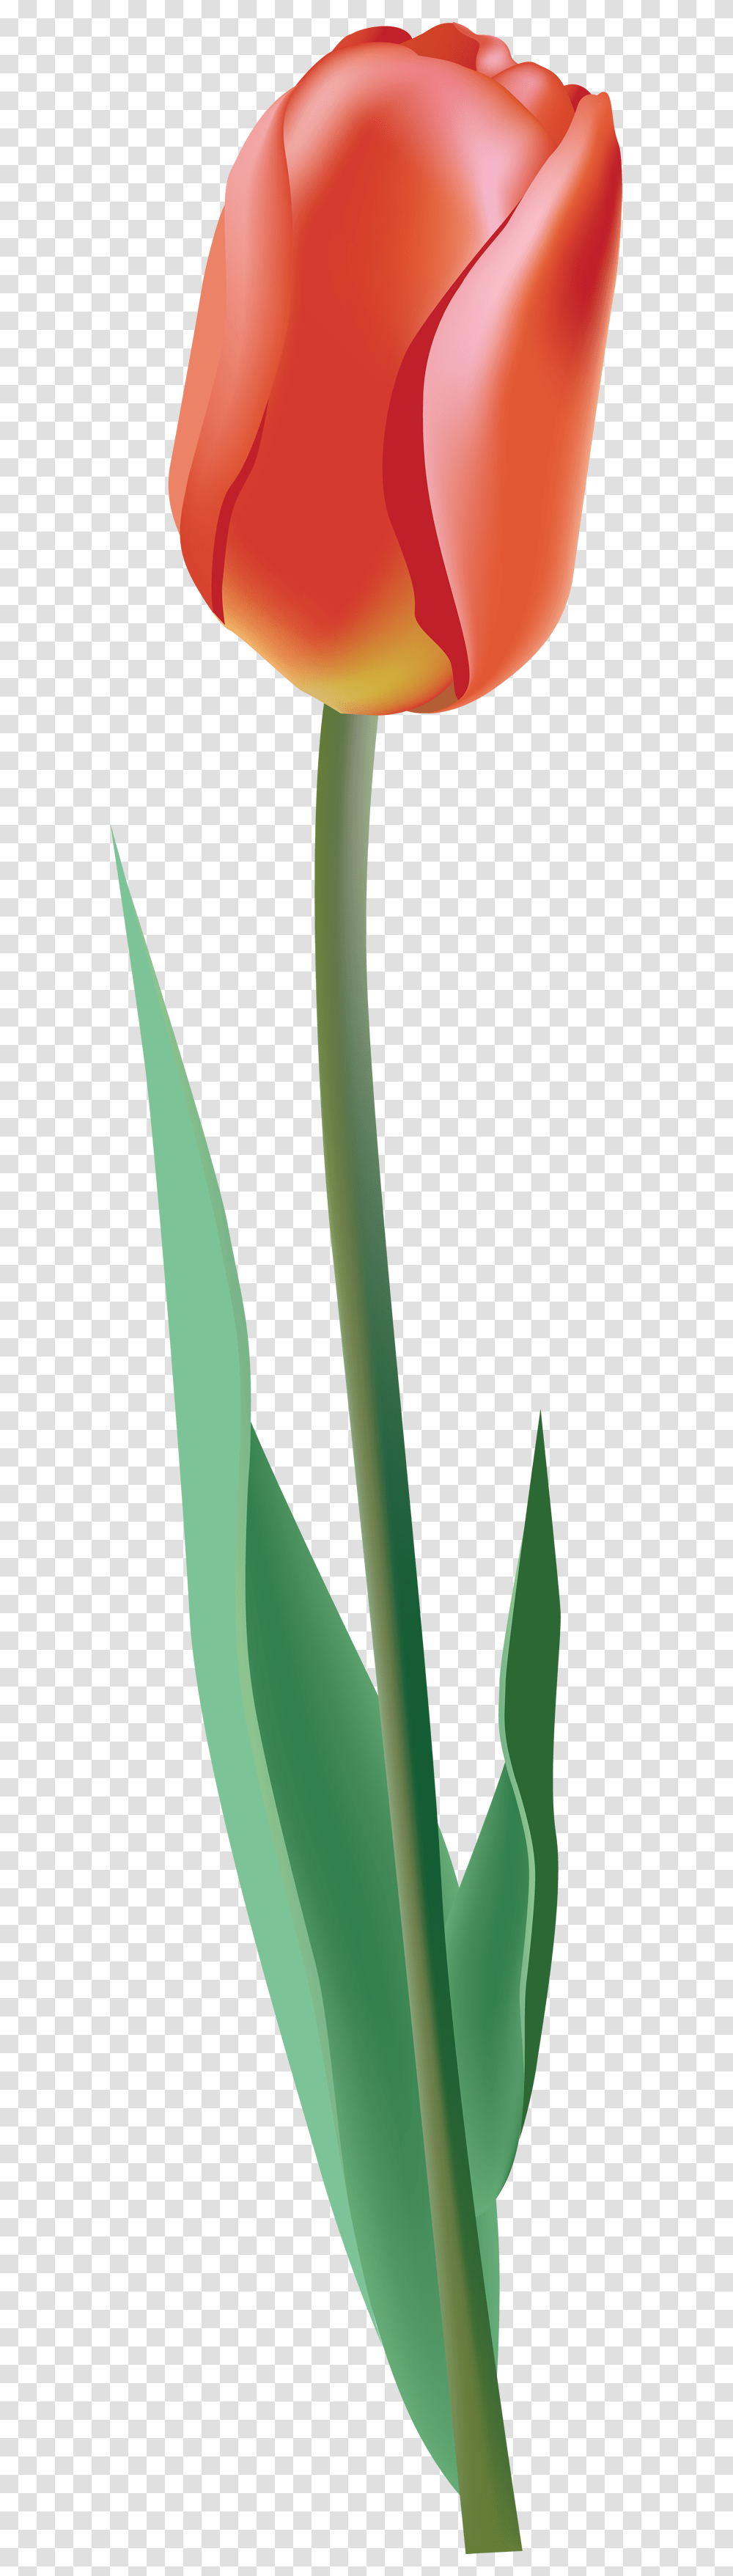 Tulip Single Single Tulip, Plant, Flower, Blossom, Weapon Transparent Png